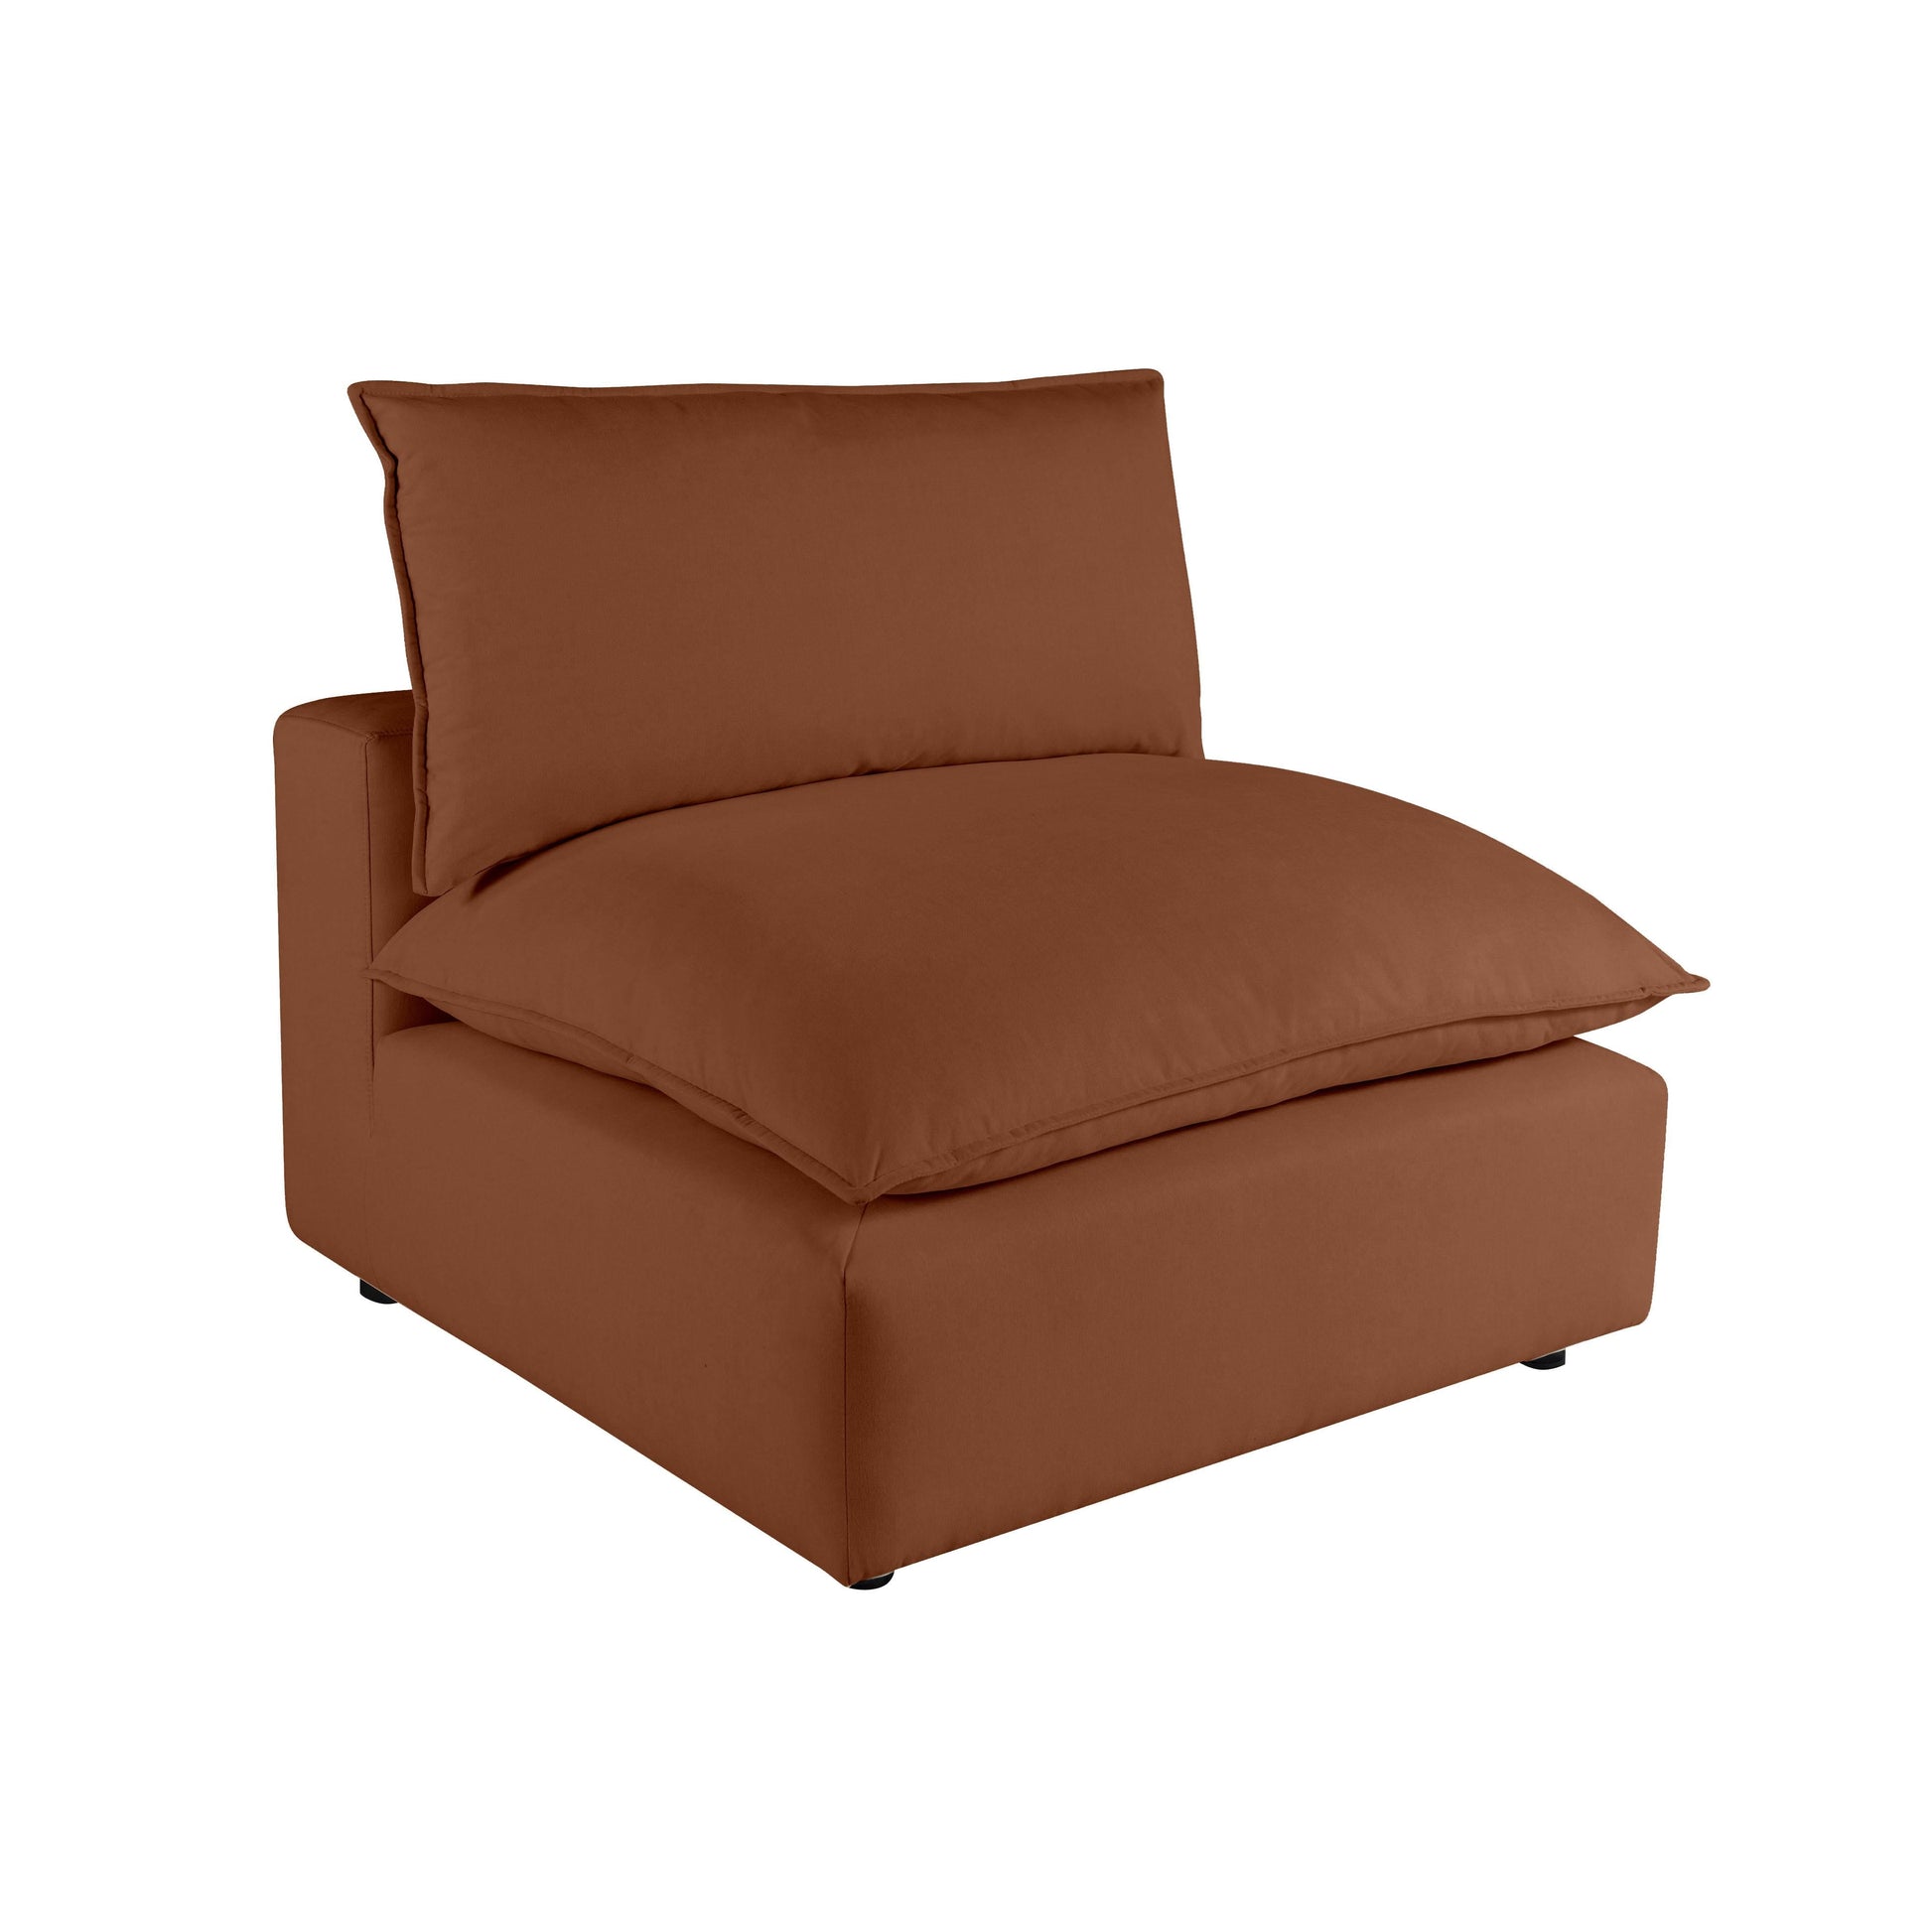 Cali Rust Armless Chair by TOV